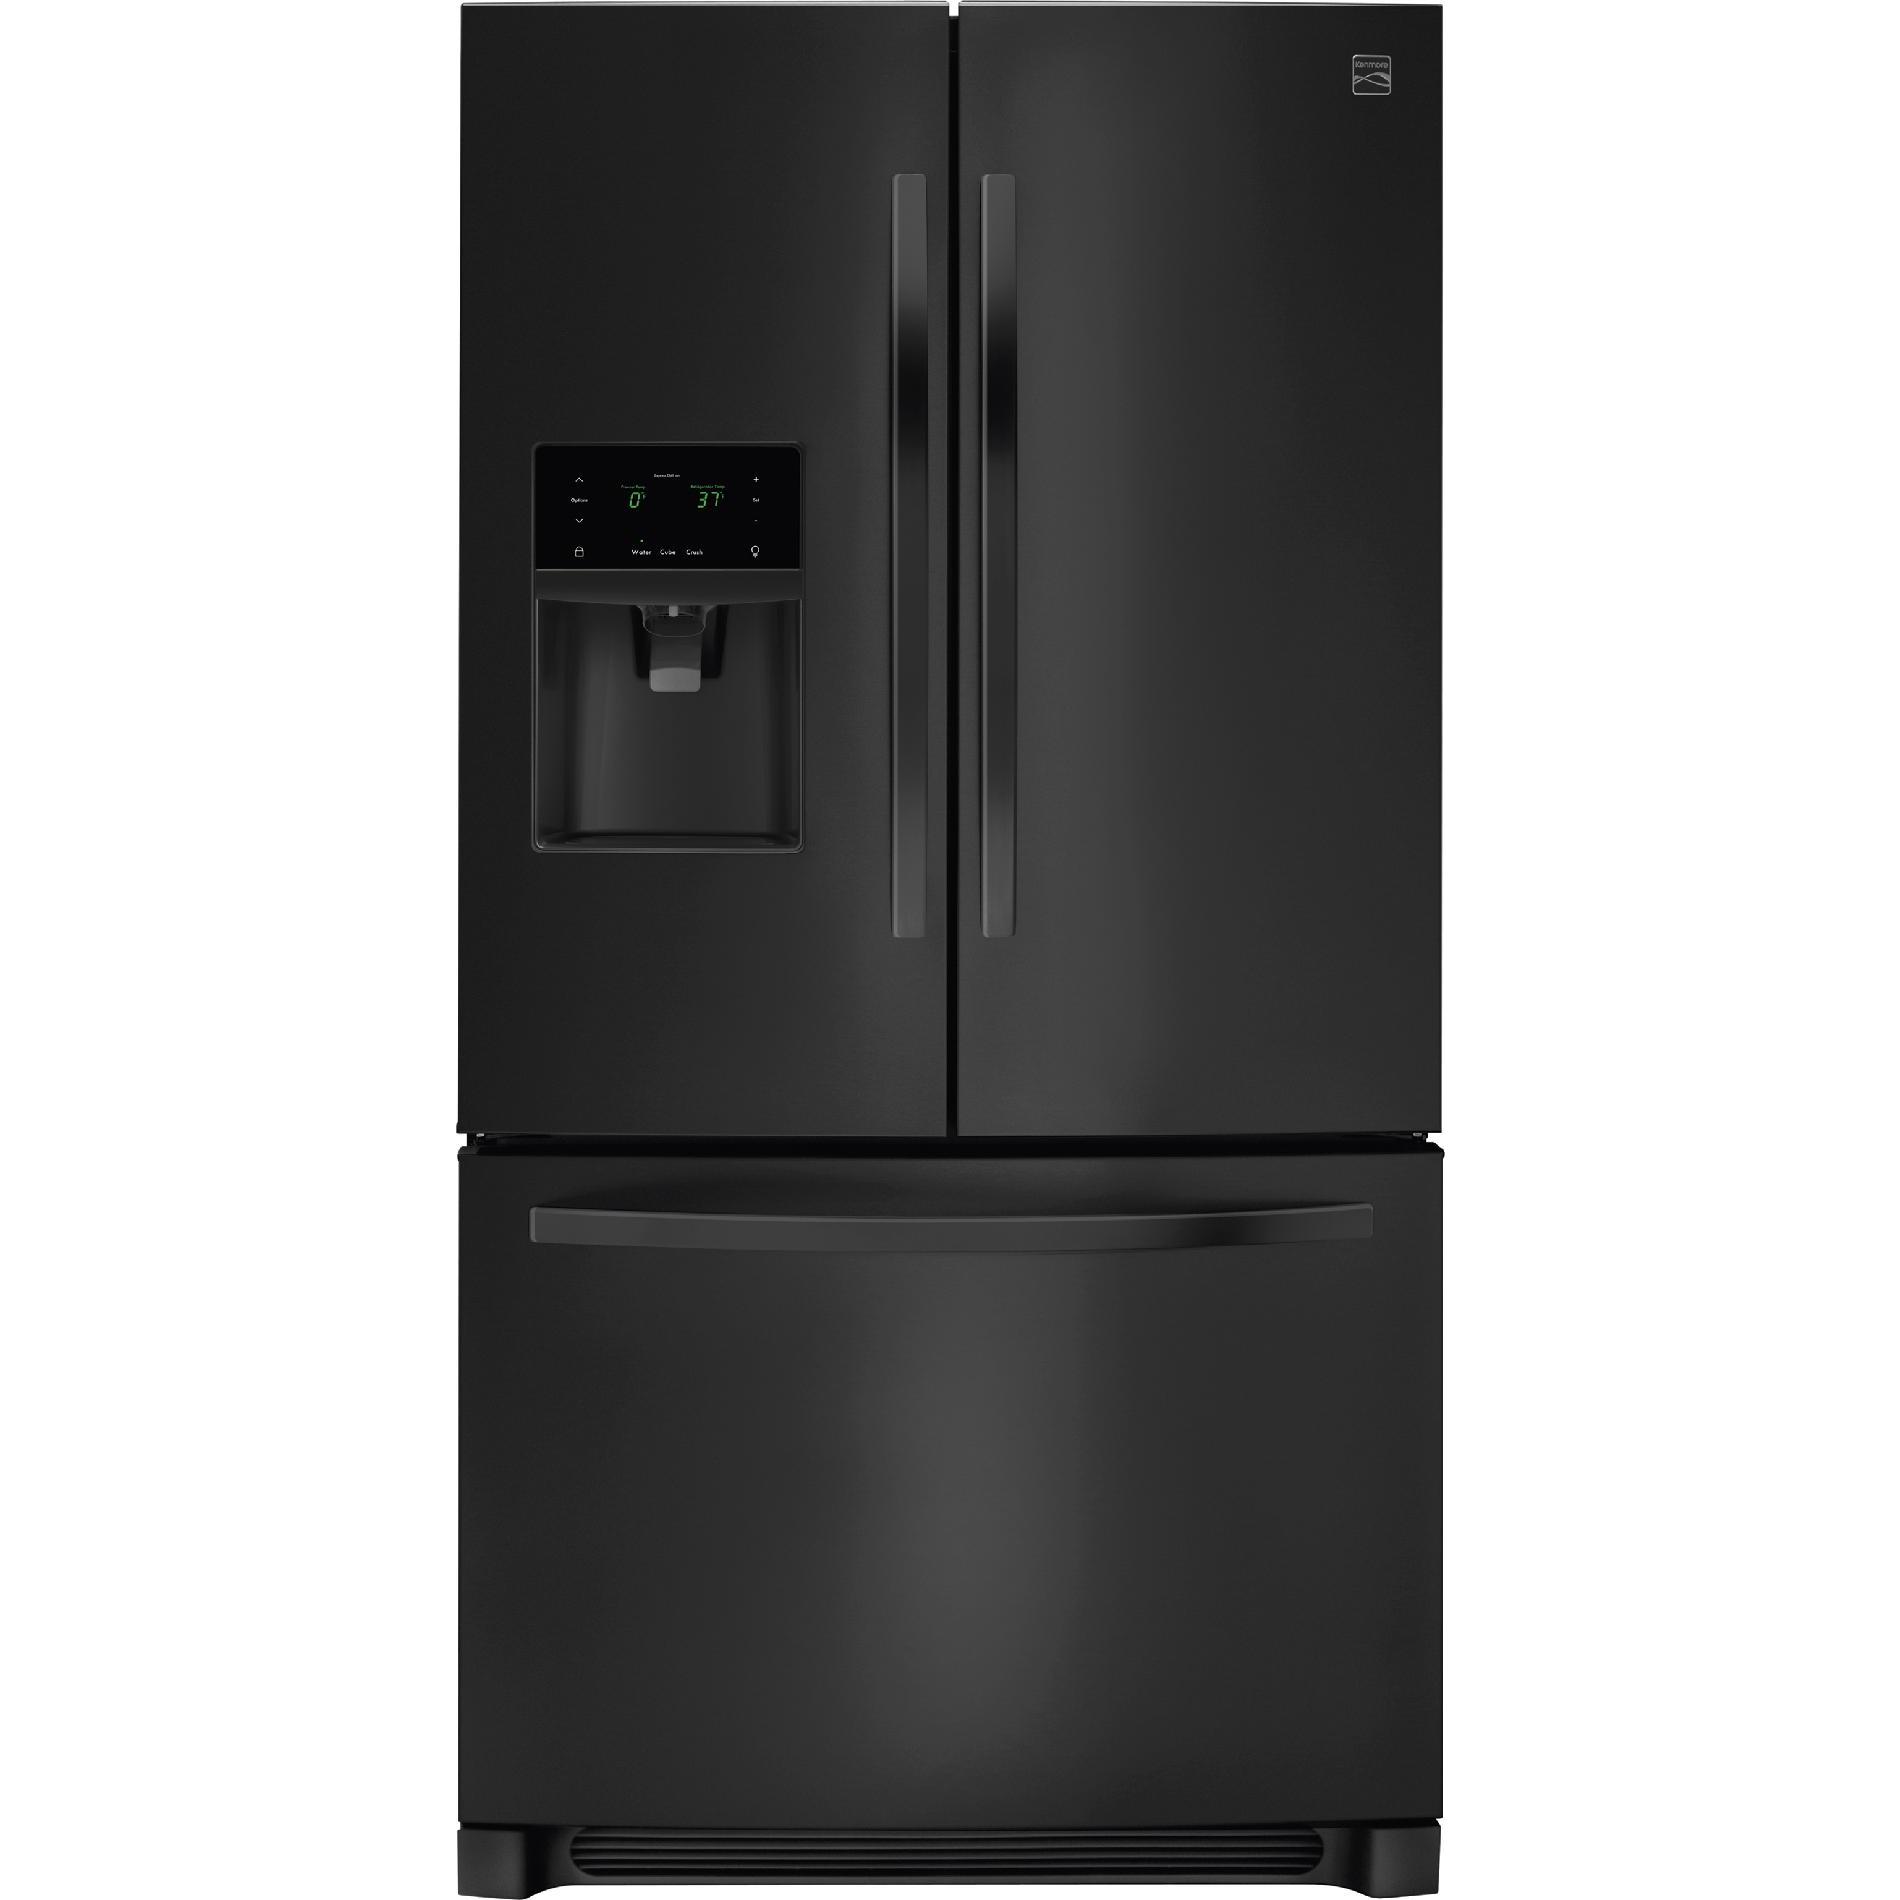 Kenmore 70349 27.2 cu. ft. French Door Refrigerator - Black | Shop Your